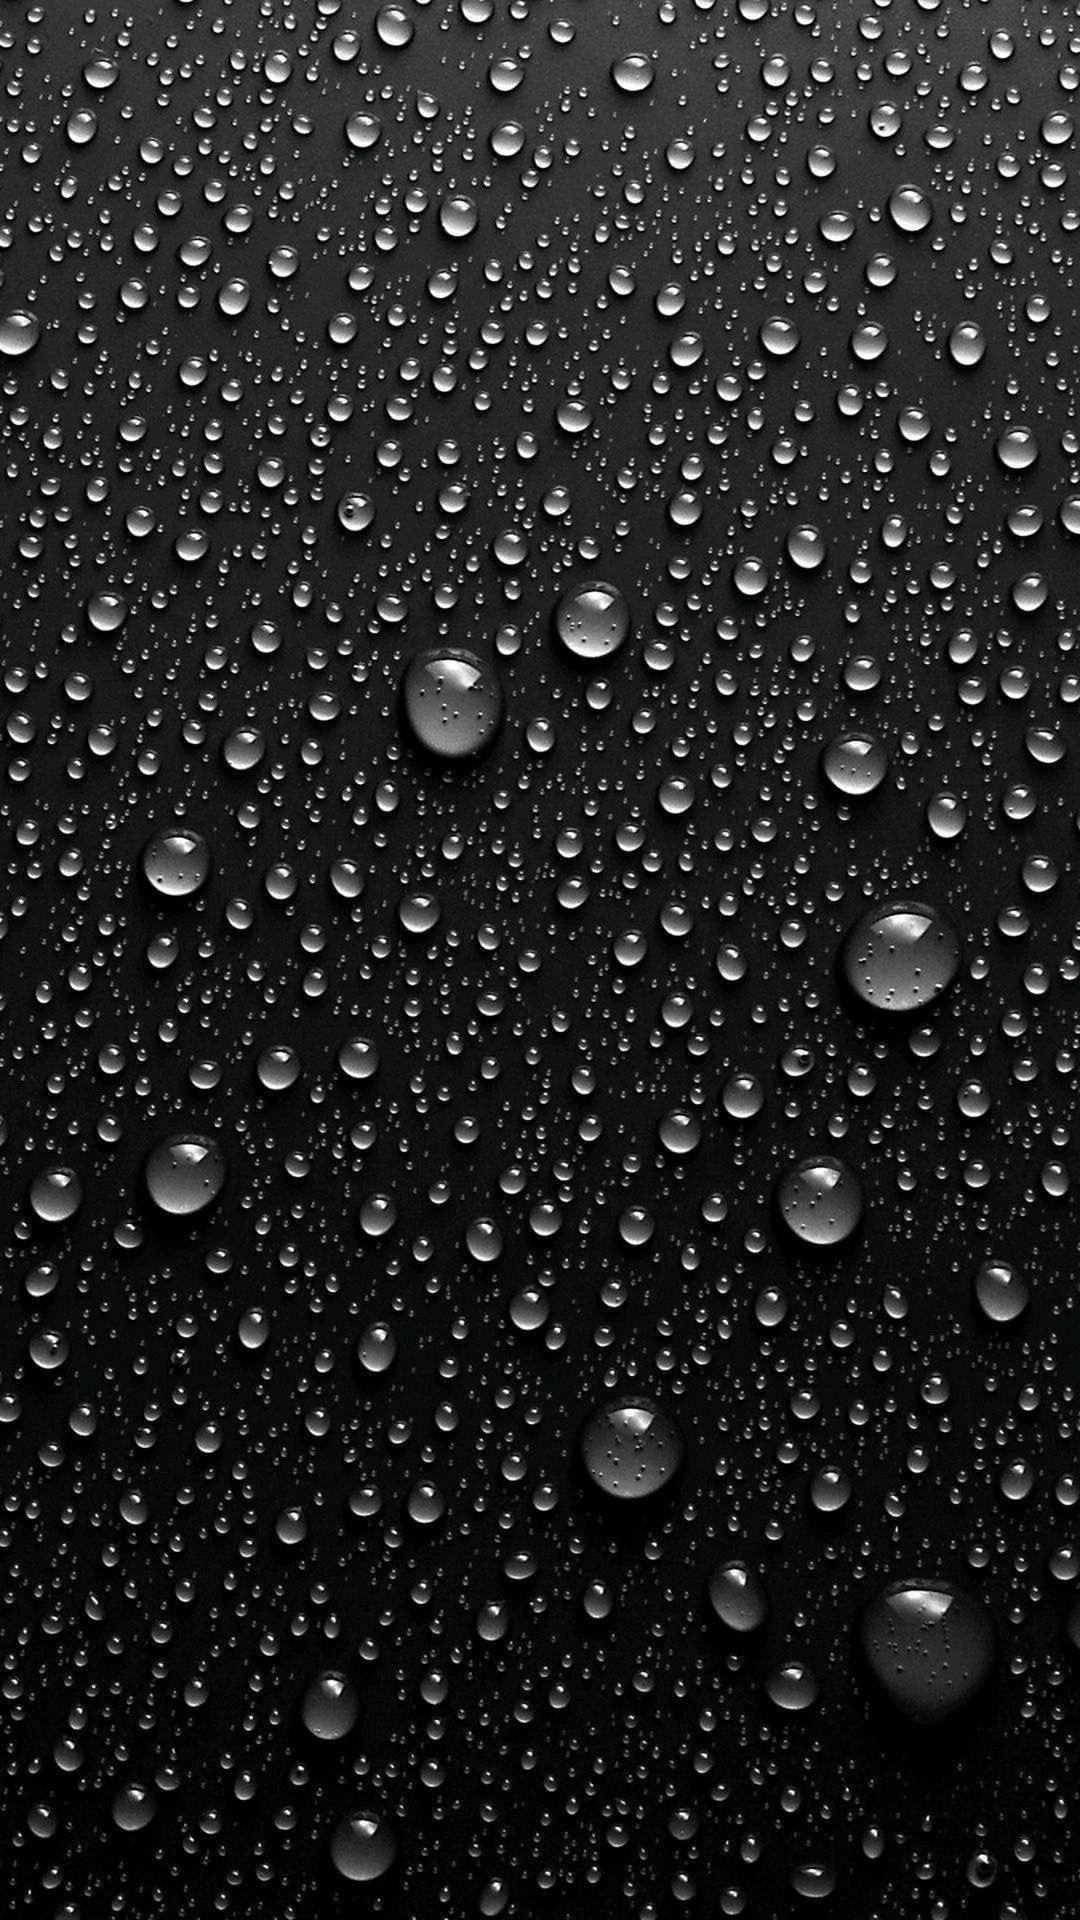 Black Iphone Droplets